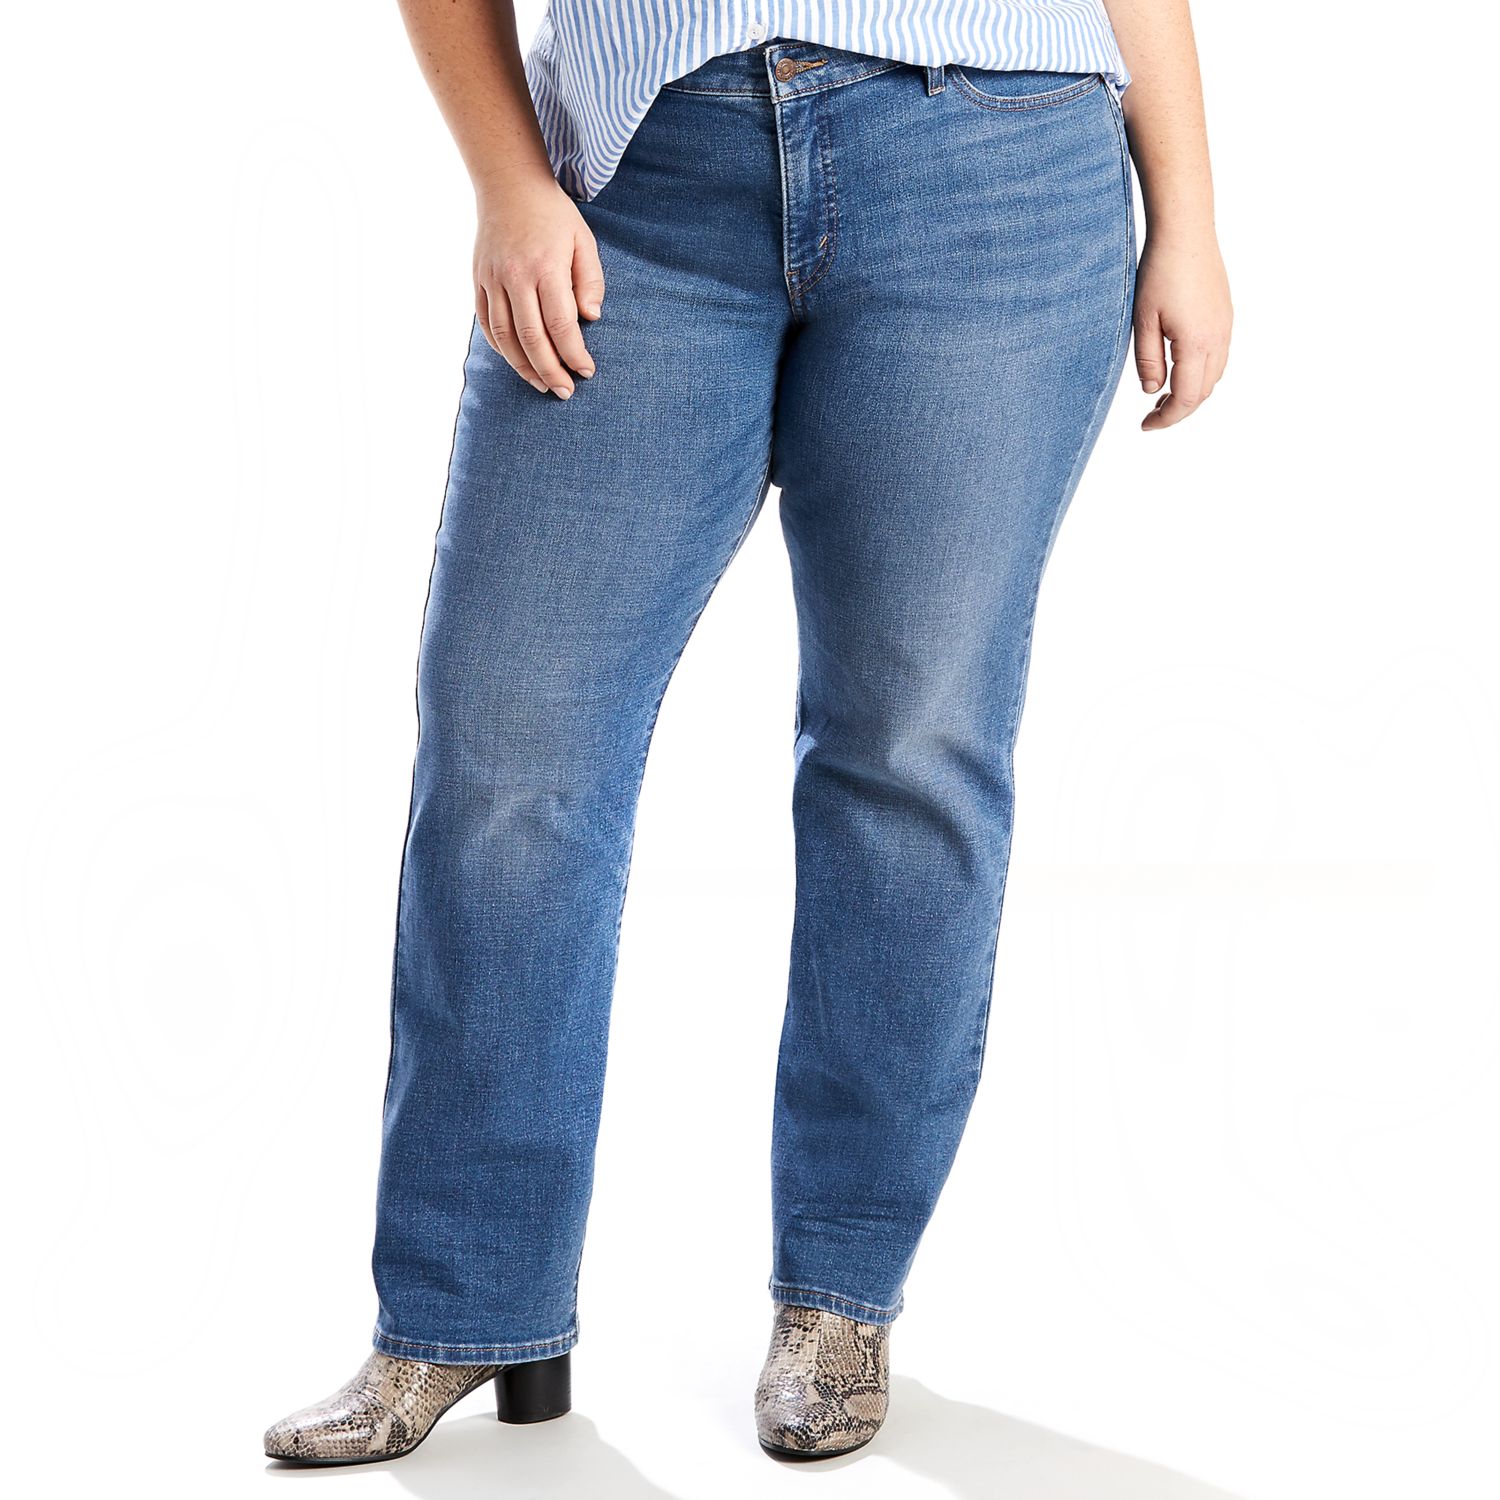 kohl's levi's skinny jeans